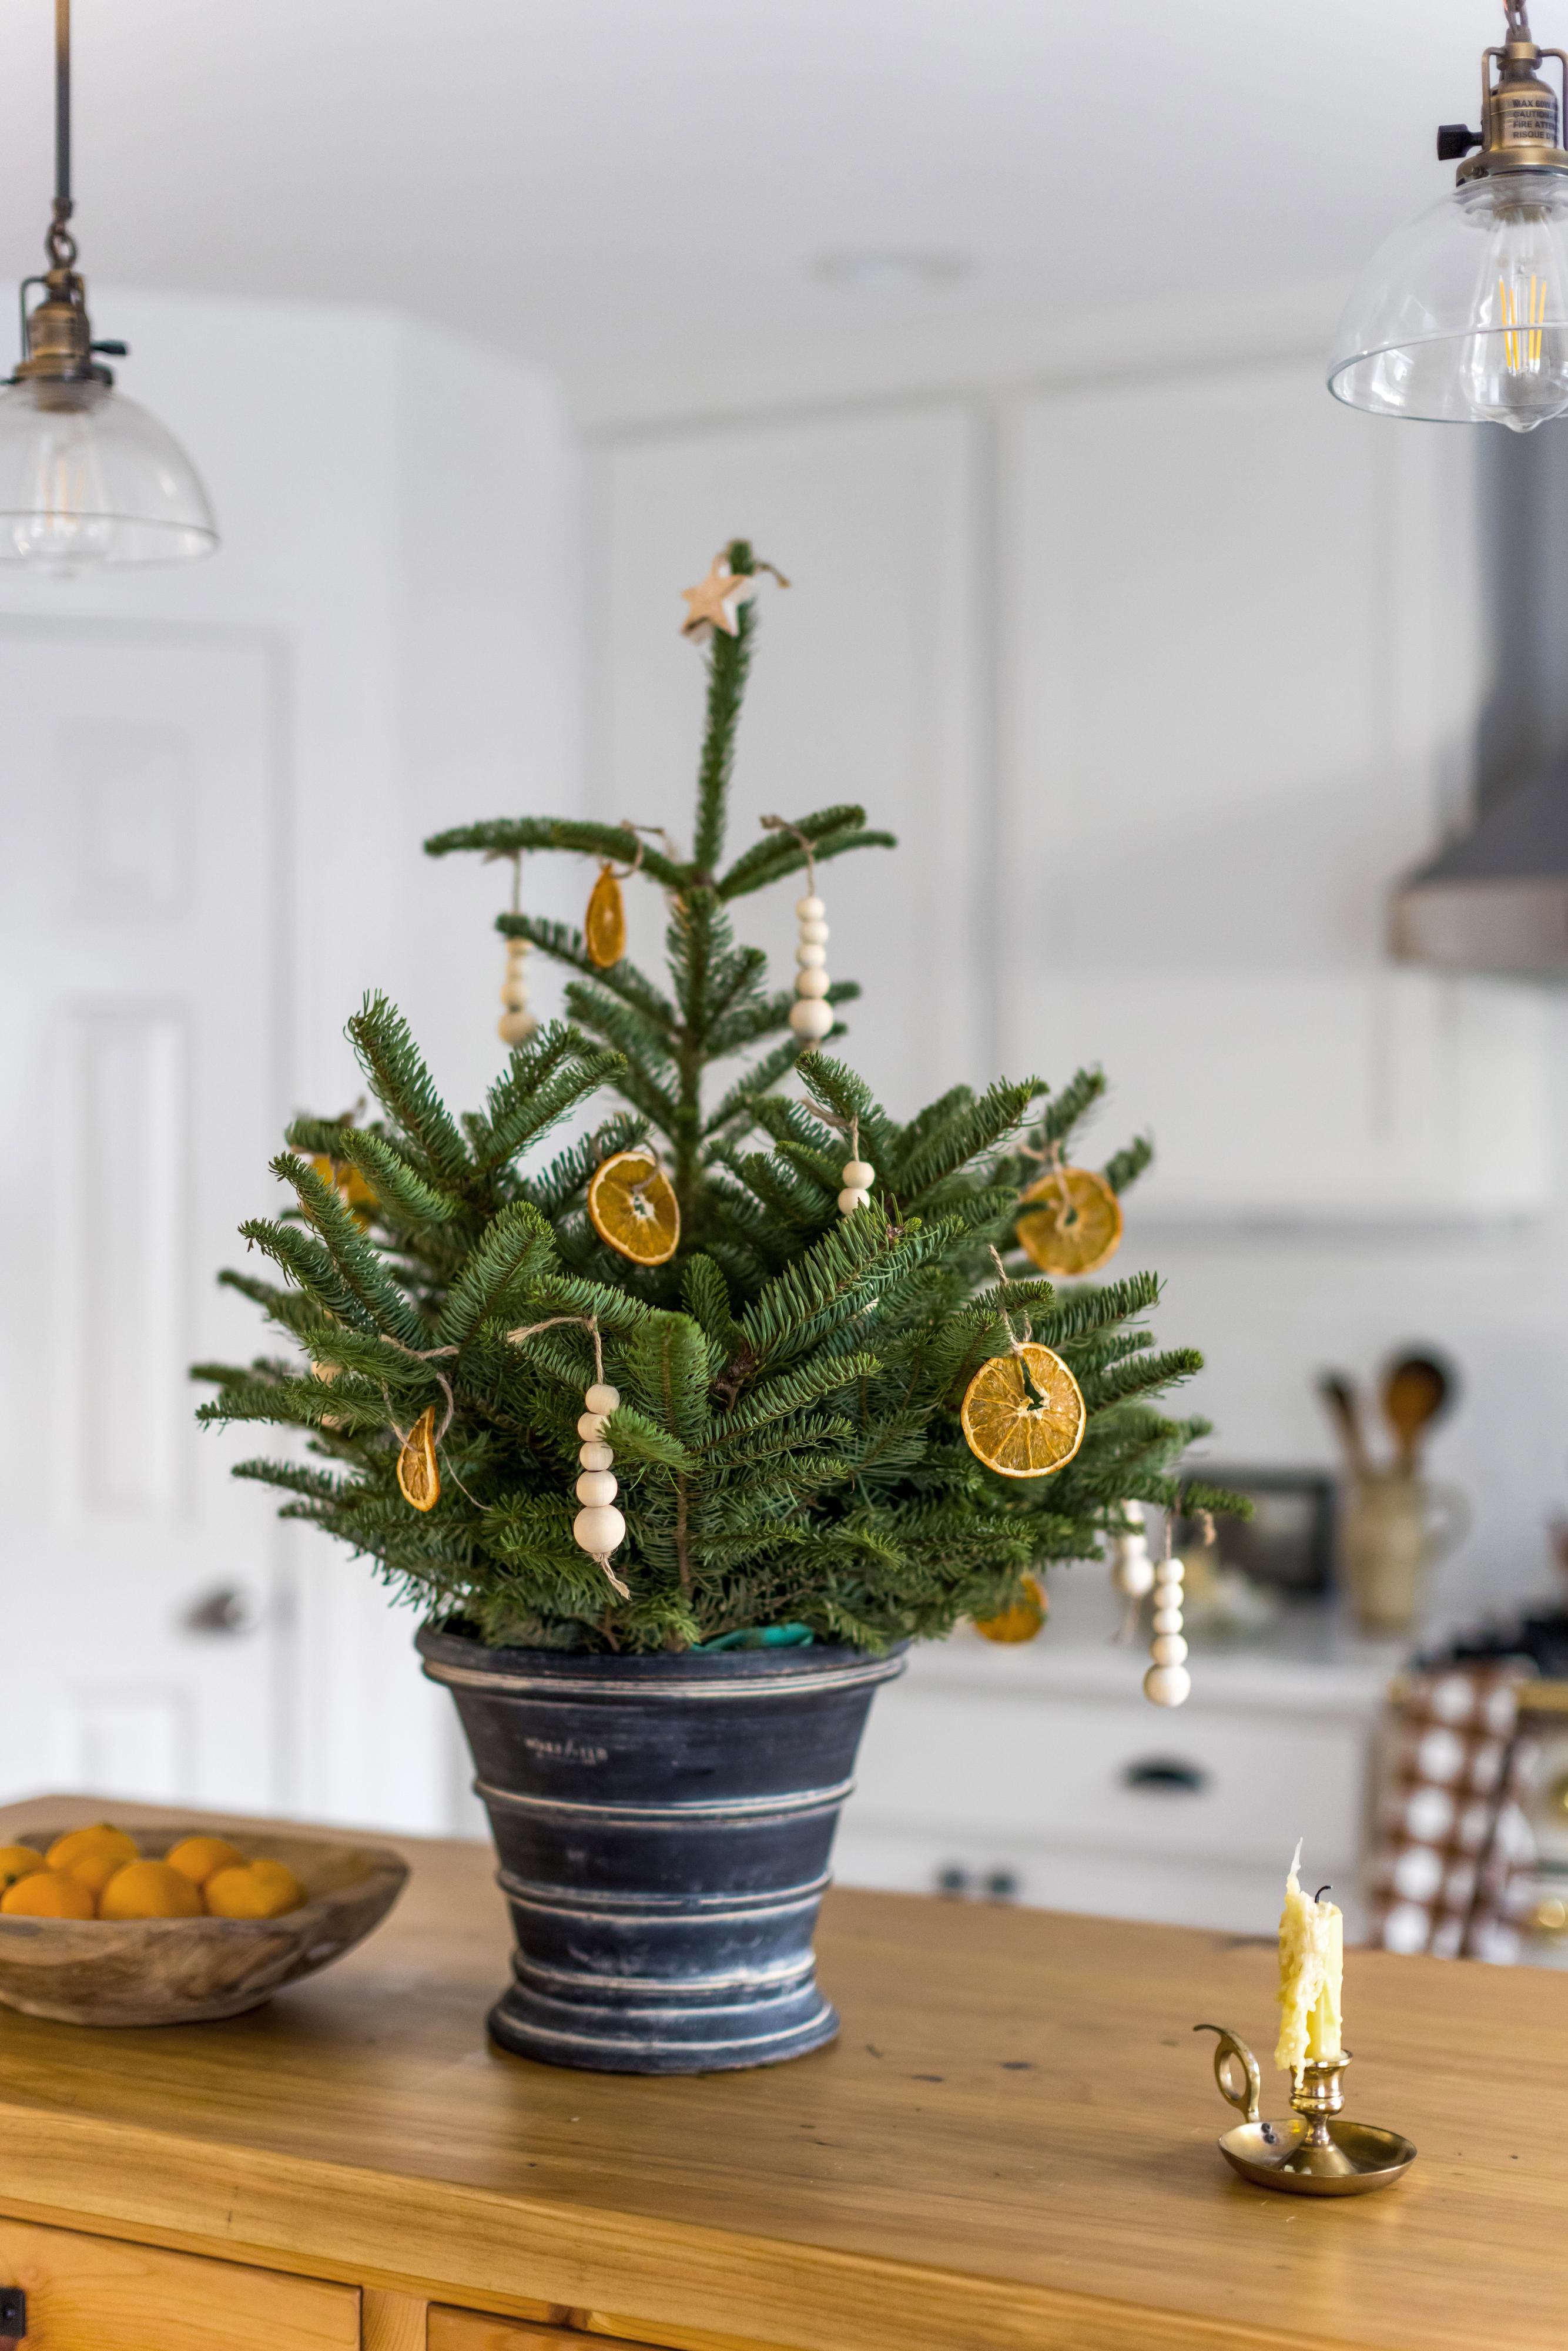 How to make homemade Christmas tree ornaments: DIY bead ornaments